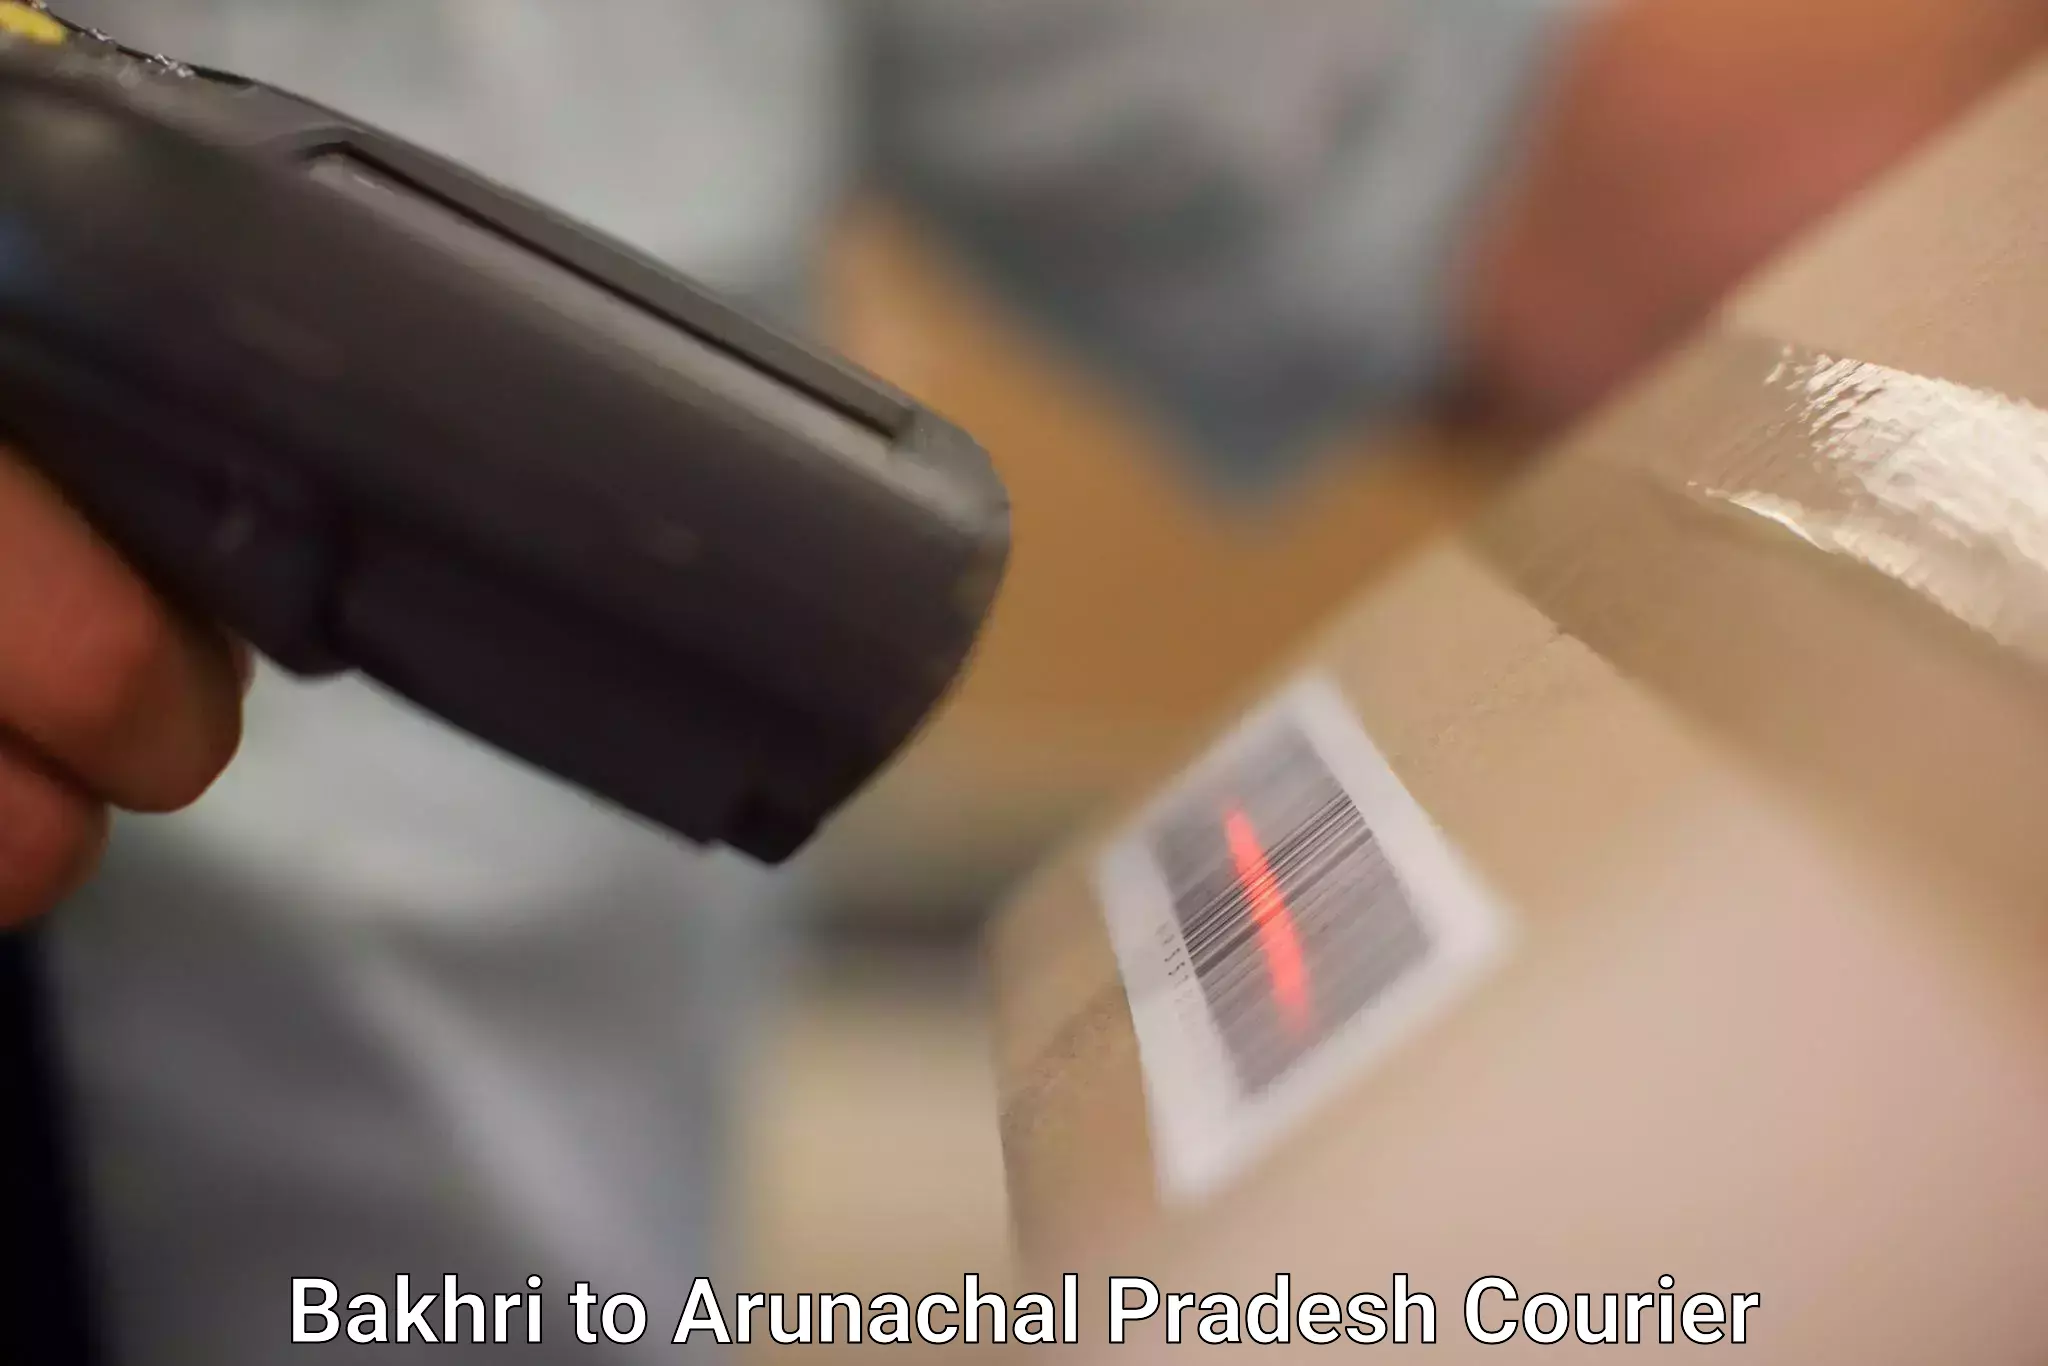 Next-day delivery options Bakhri to Arunachal Pradesh